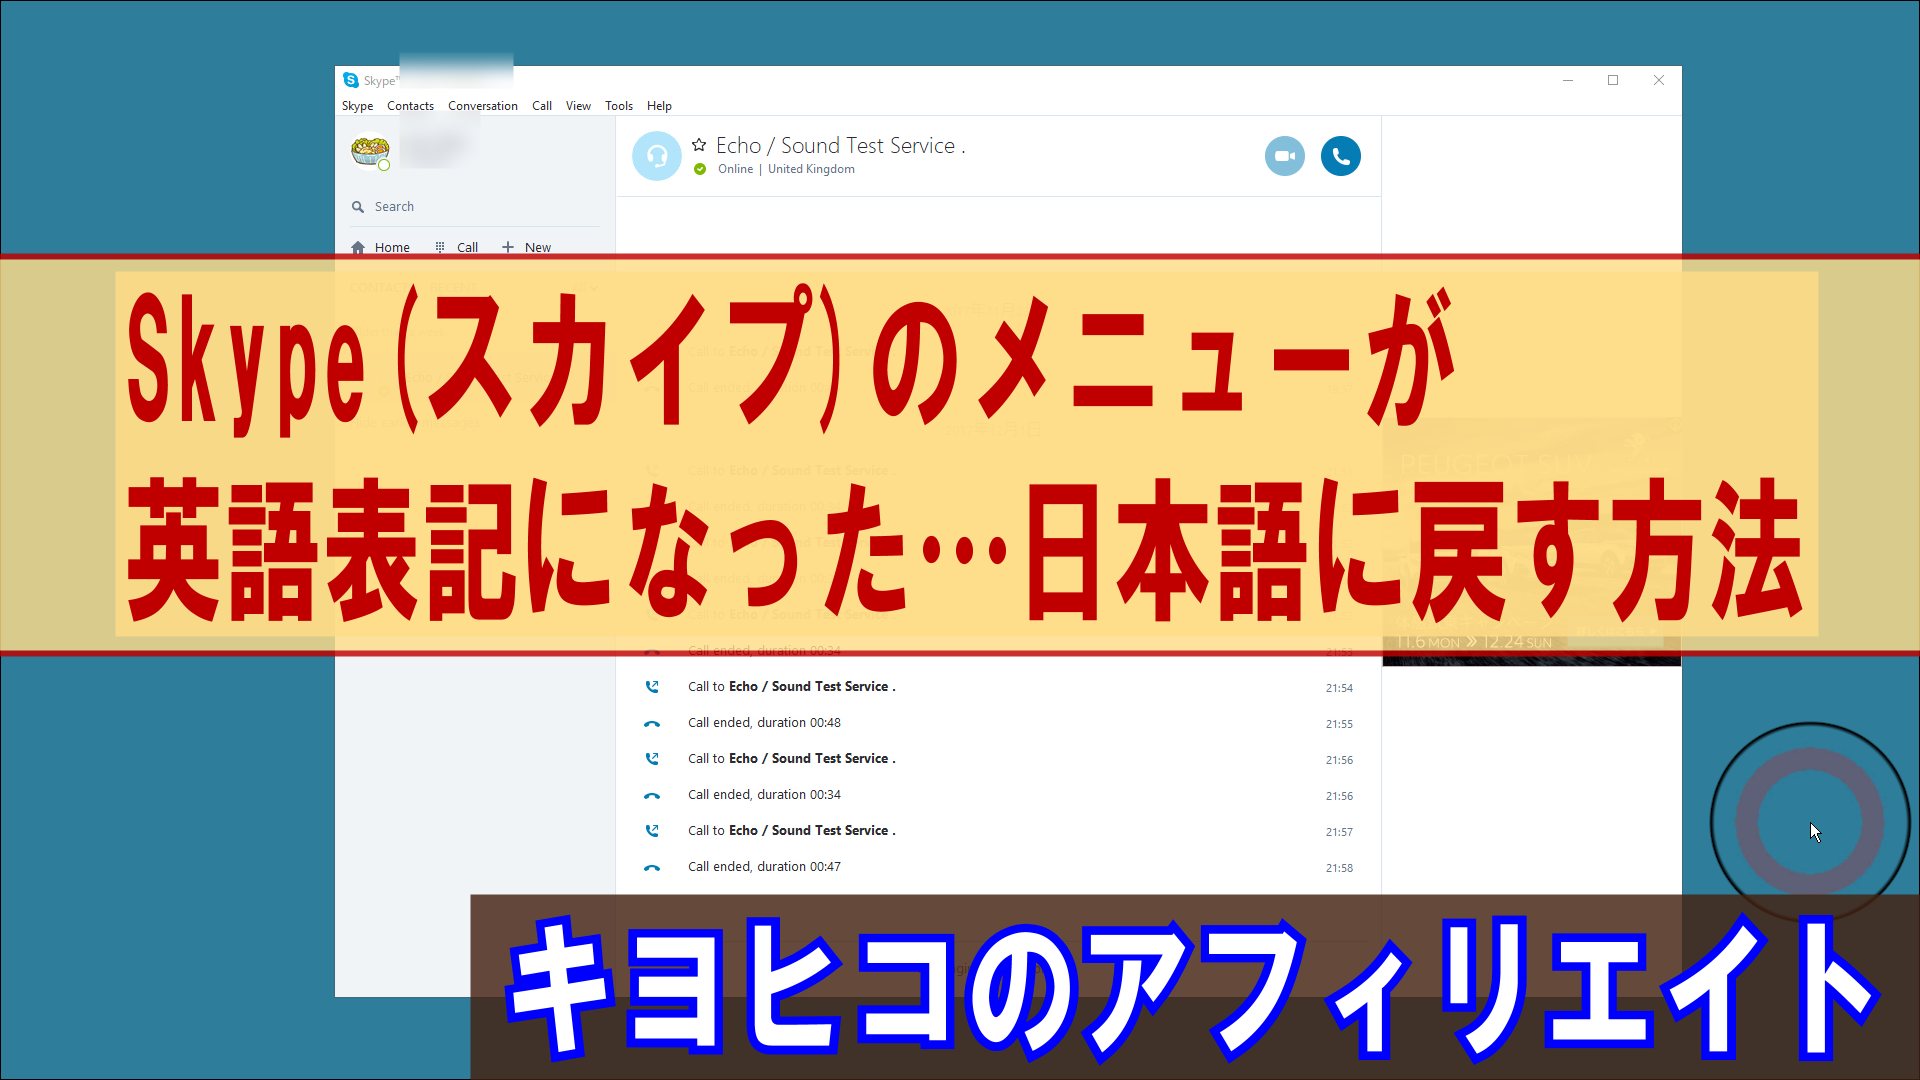 Skype(スカイプ)のメニューが英語表記になった…日本語に戻す方法